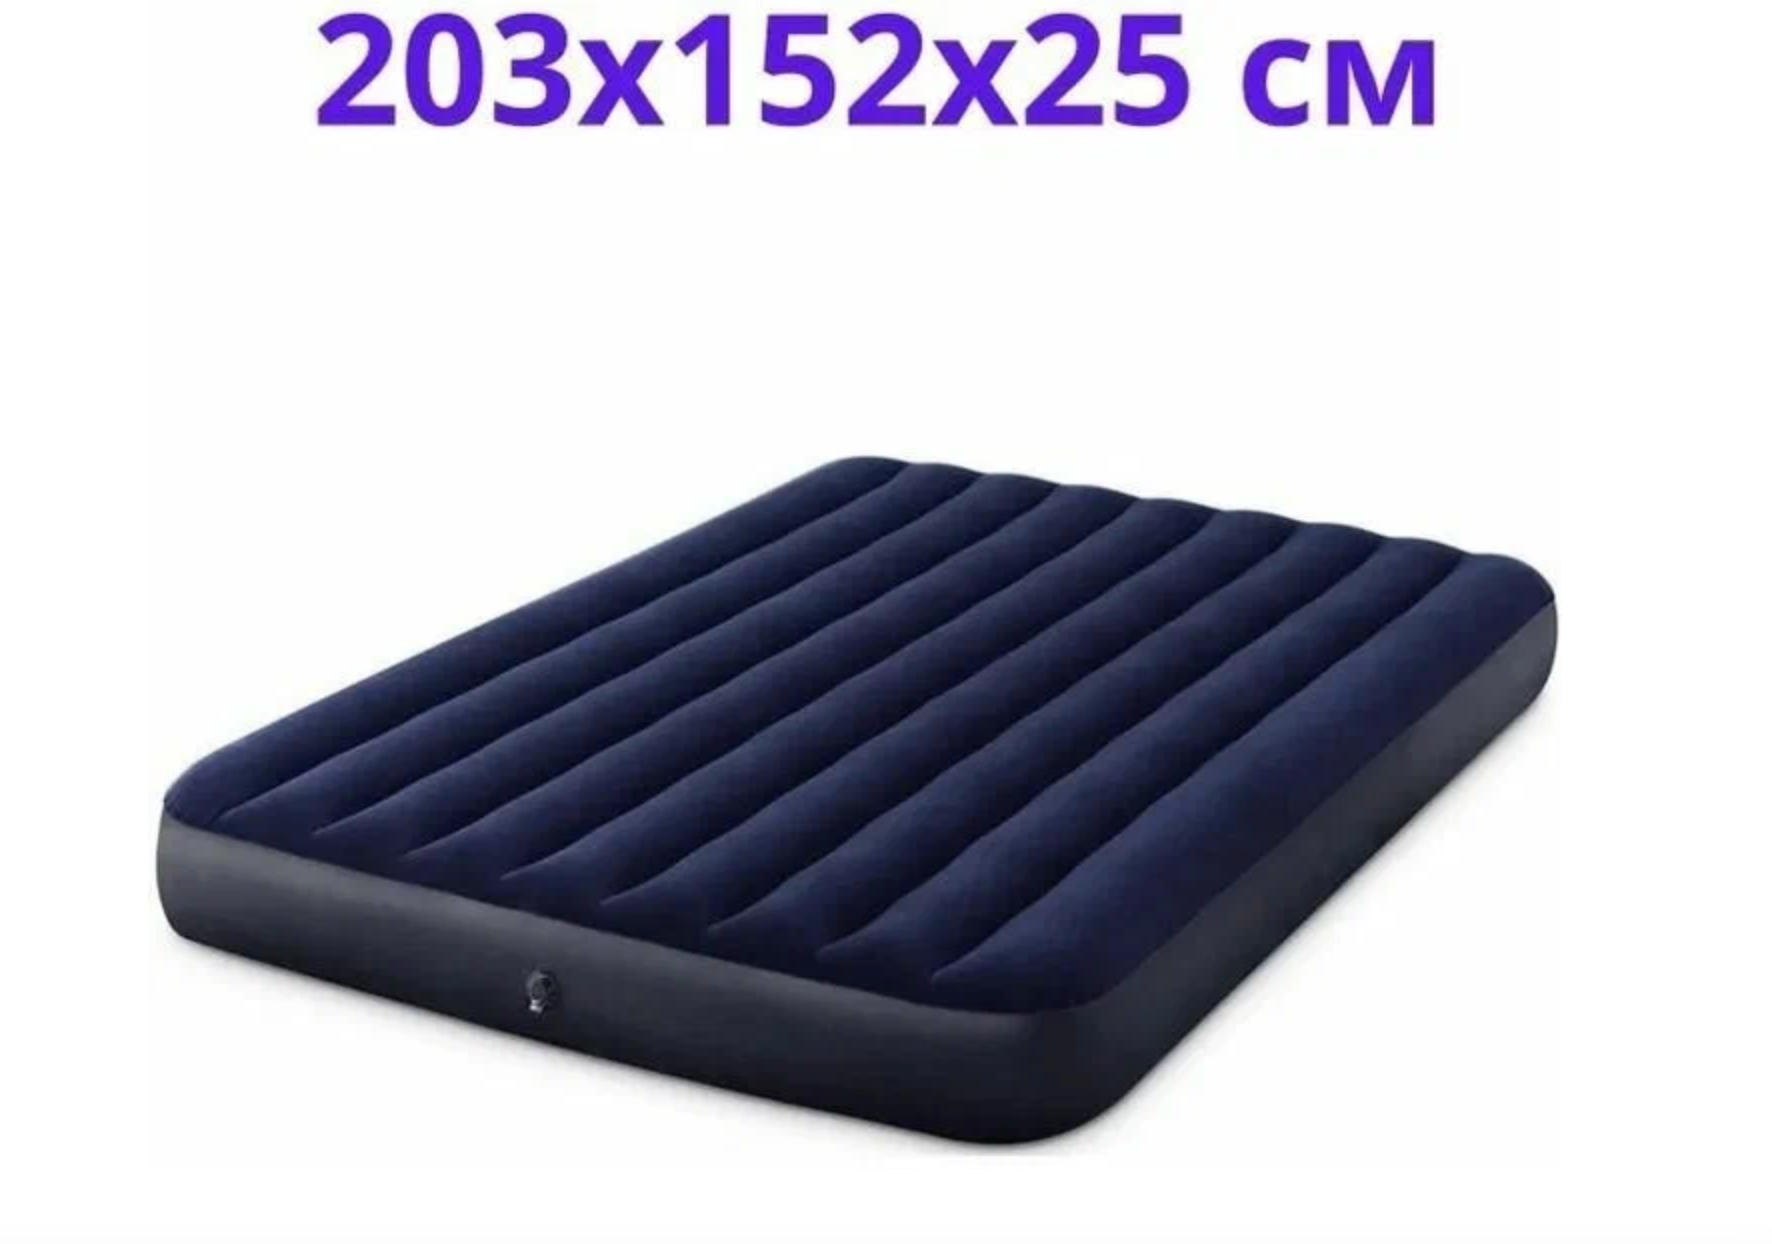 Матрас надувной Intex Beam Standard, 152х203х25 см